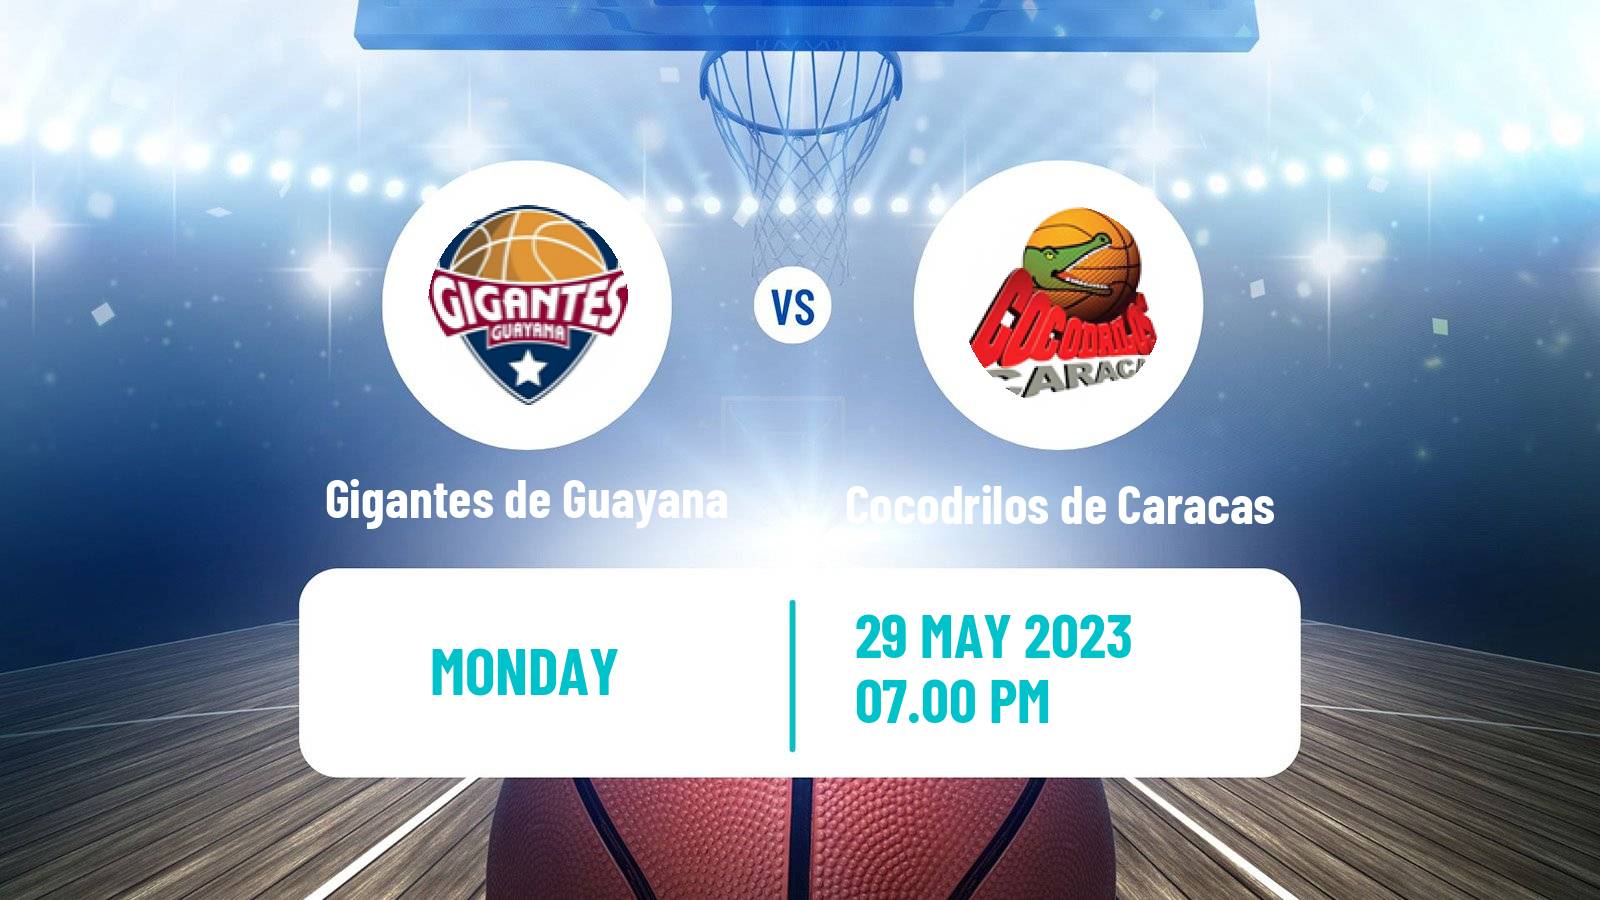 Basketball Venezuelan Superliga Basketball Gigantes de Guayana - Cocodrilos de Caracas